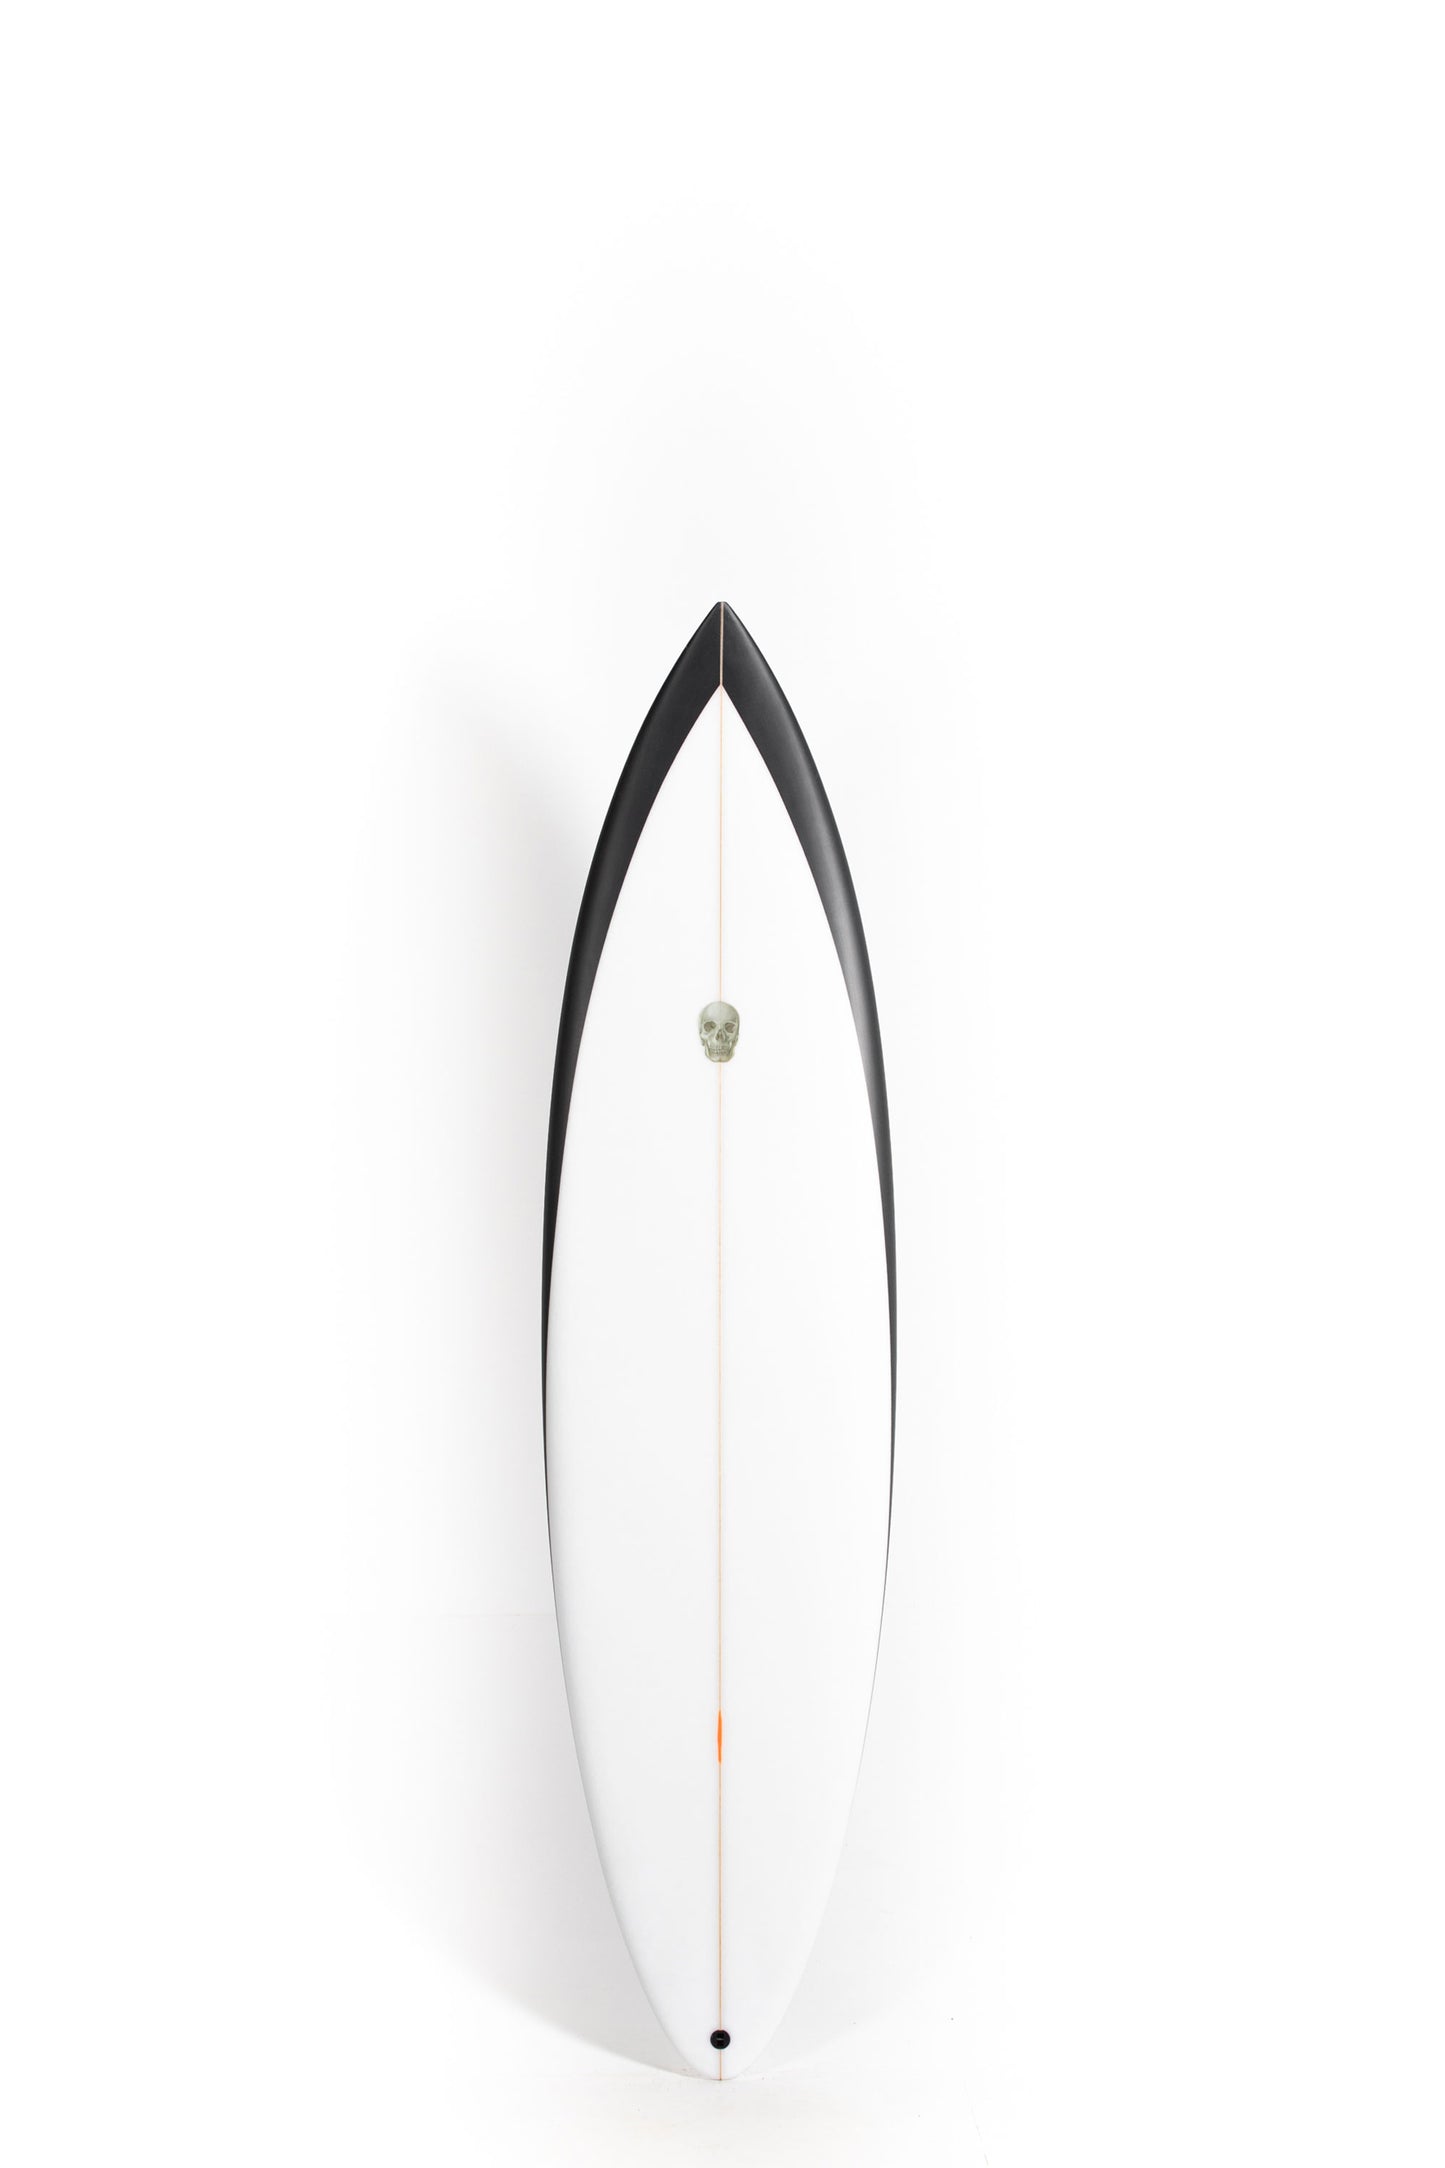 Pukas Surf Shop - Christenson Surfboards - CARRERA - 6'8" x 19 1/2 x 2 11/16 - 38,33L - CX04793